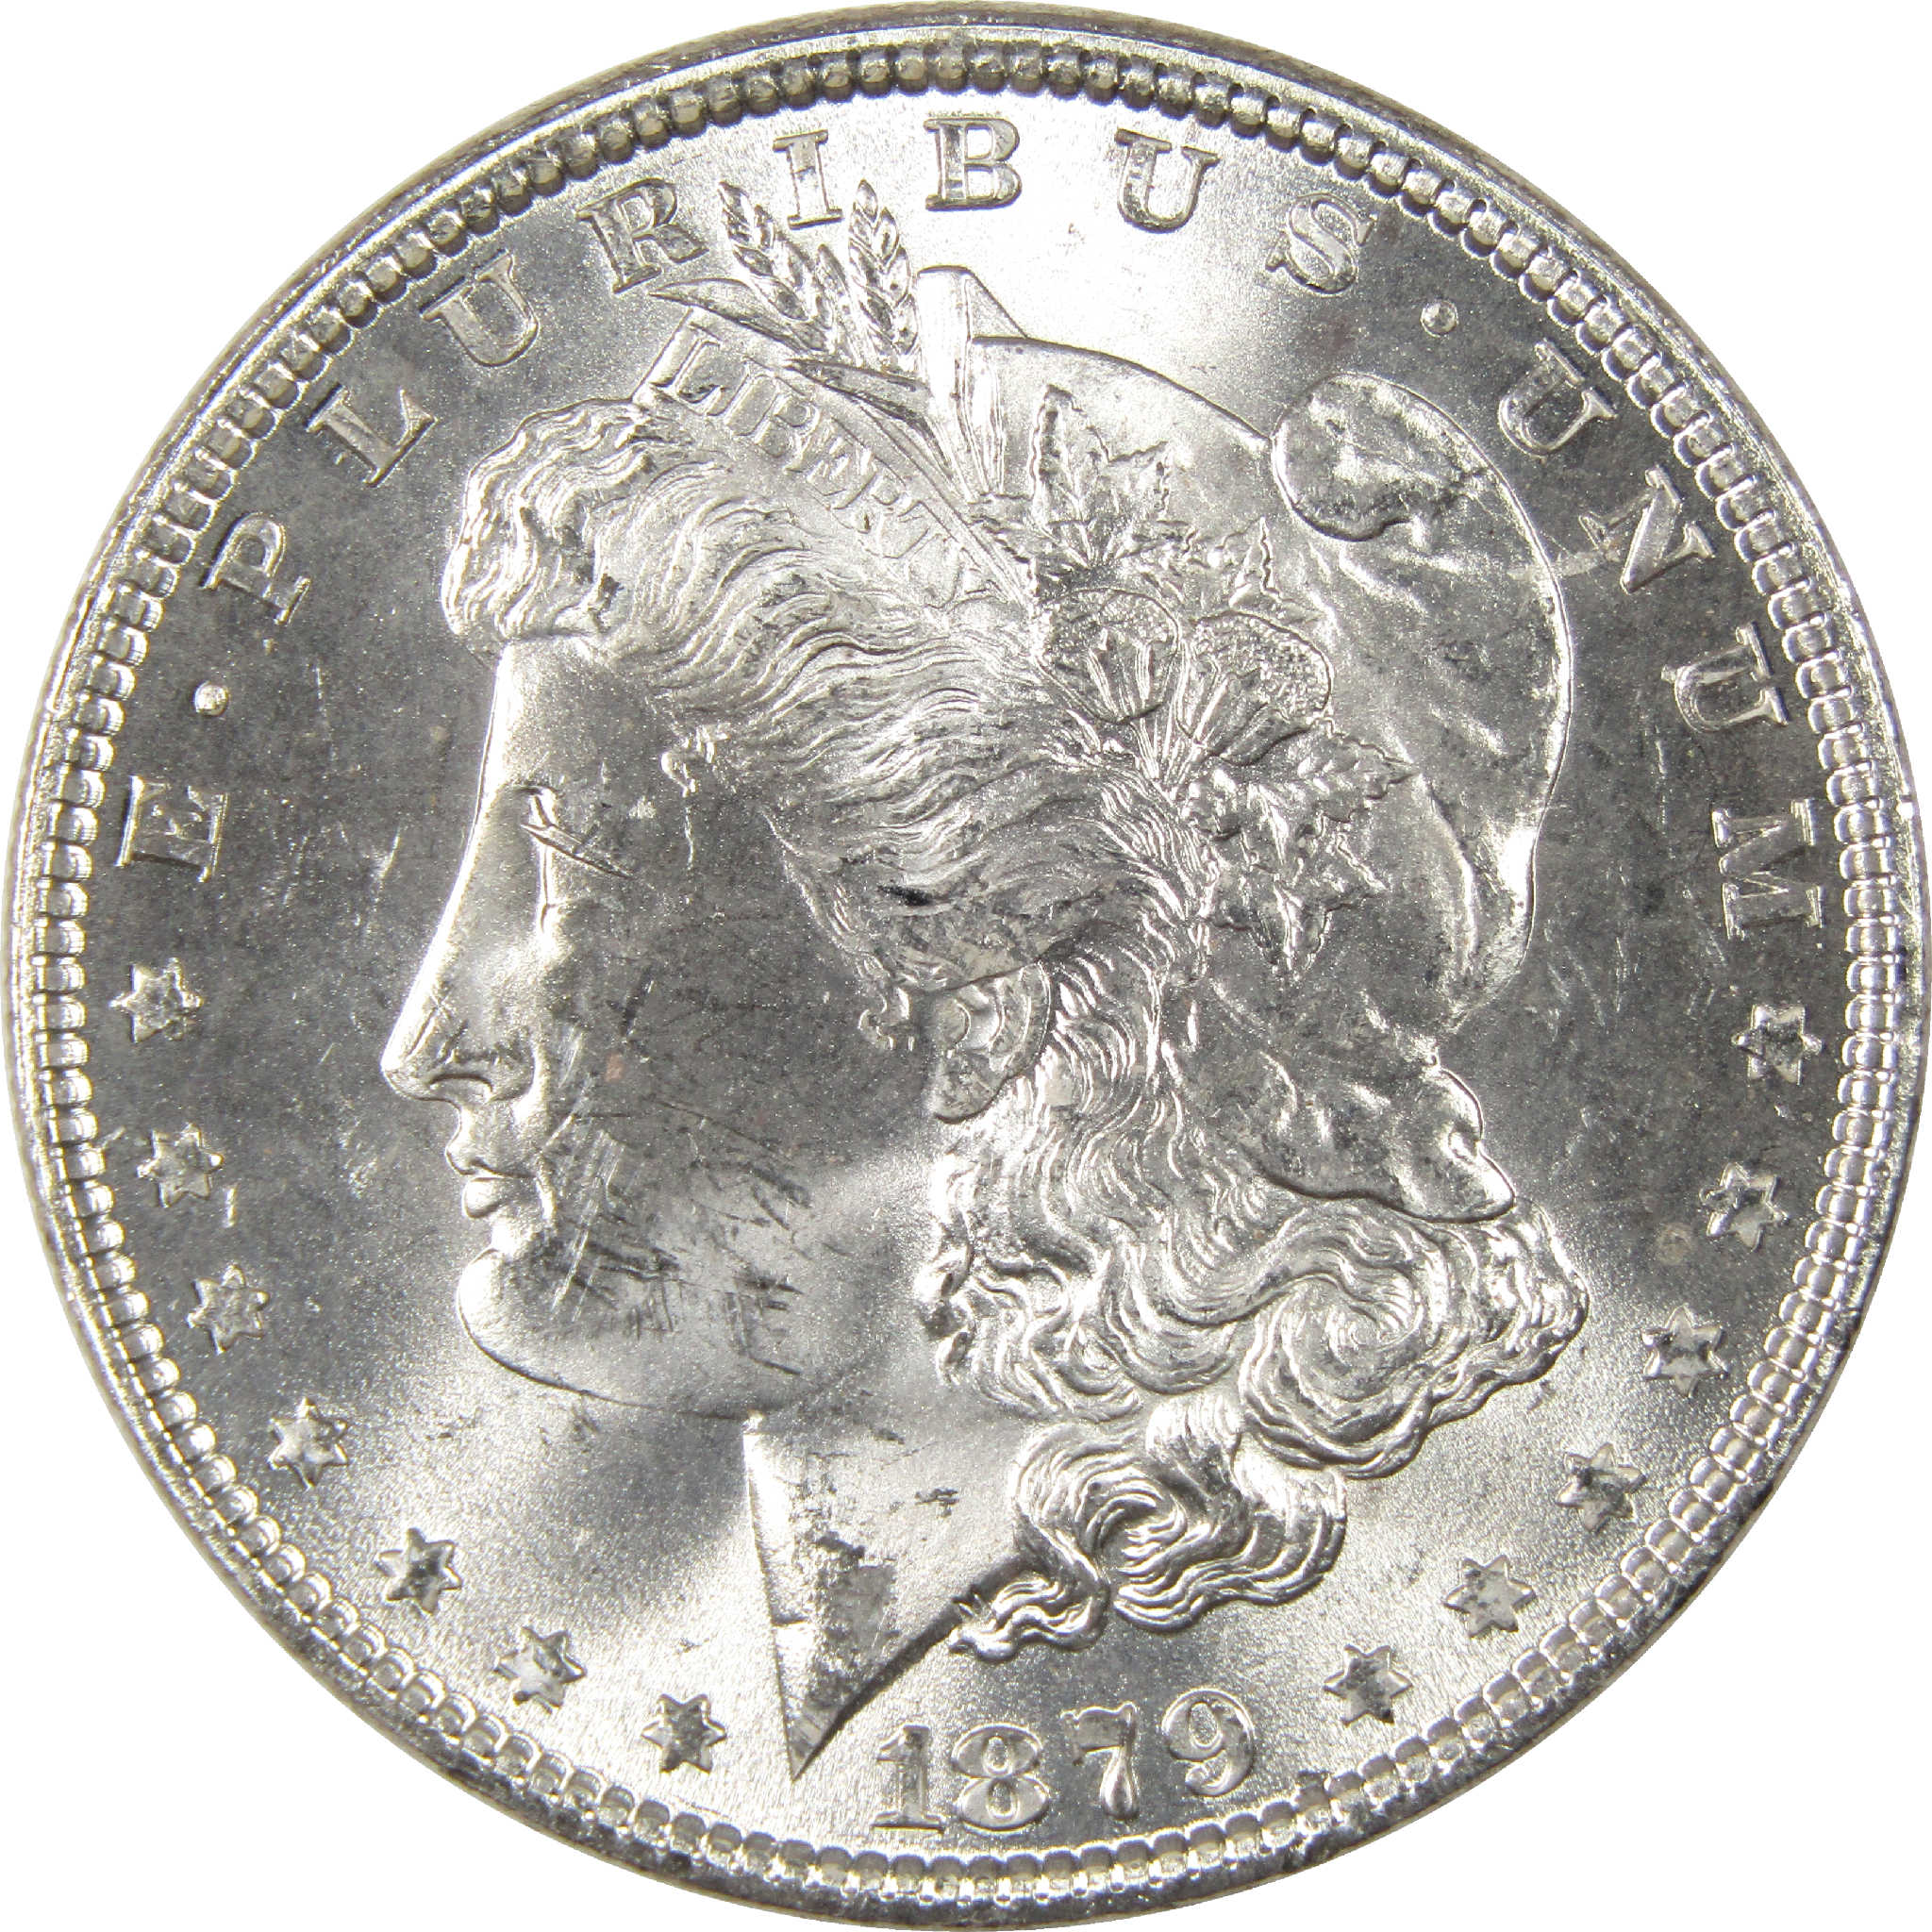 1879 Morgan Dollar BU Choice Uncirculated Silver $1 Coin - Morgan coin - Morgan silver dollar - Morgan silver dollar for sale - Profile Coins &amp; Collectibles